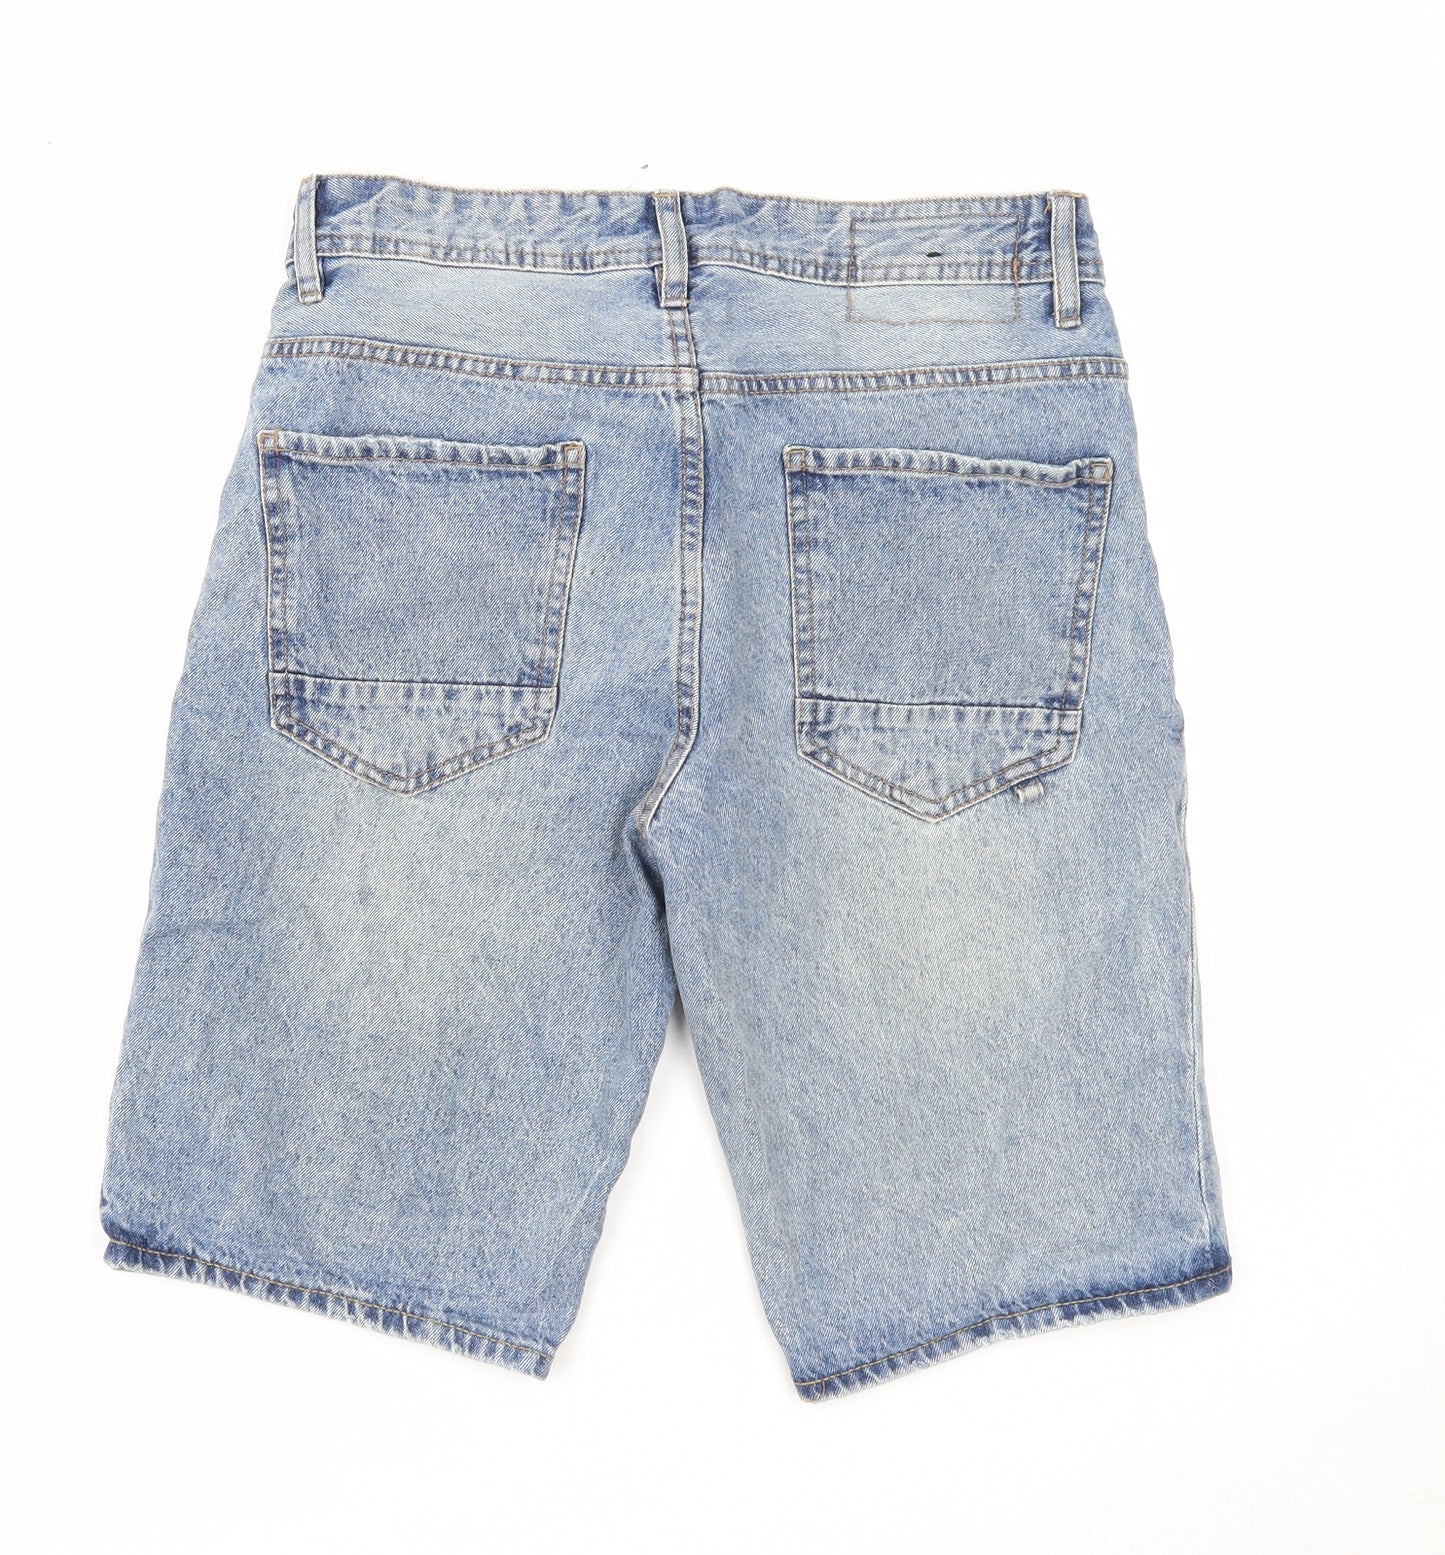 Cotton On Mens Blue Cotton Biker Shorts Size 30 in Regular Zip